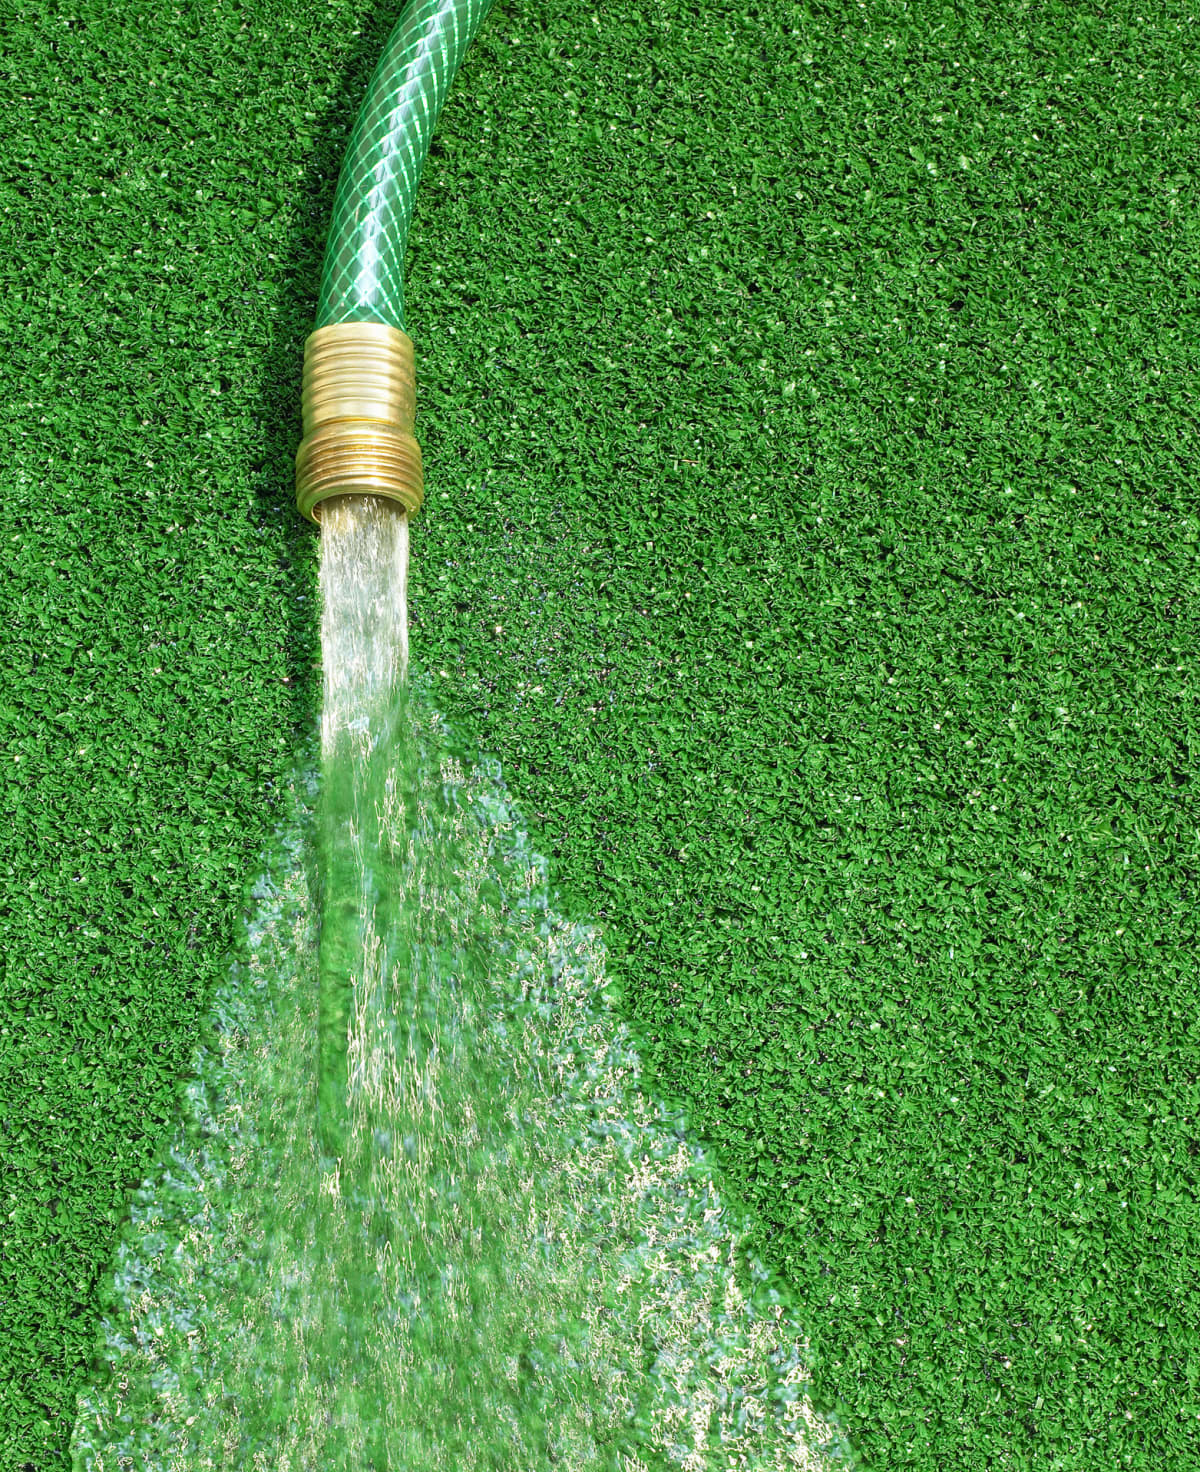 A hose on artificial grass